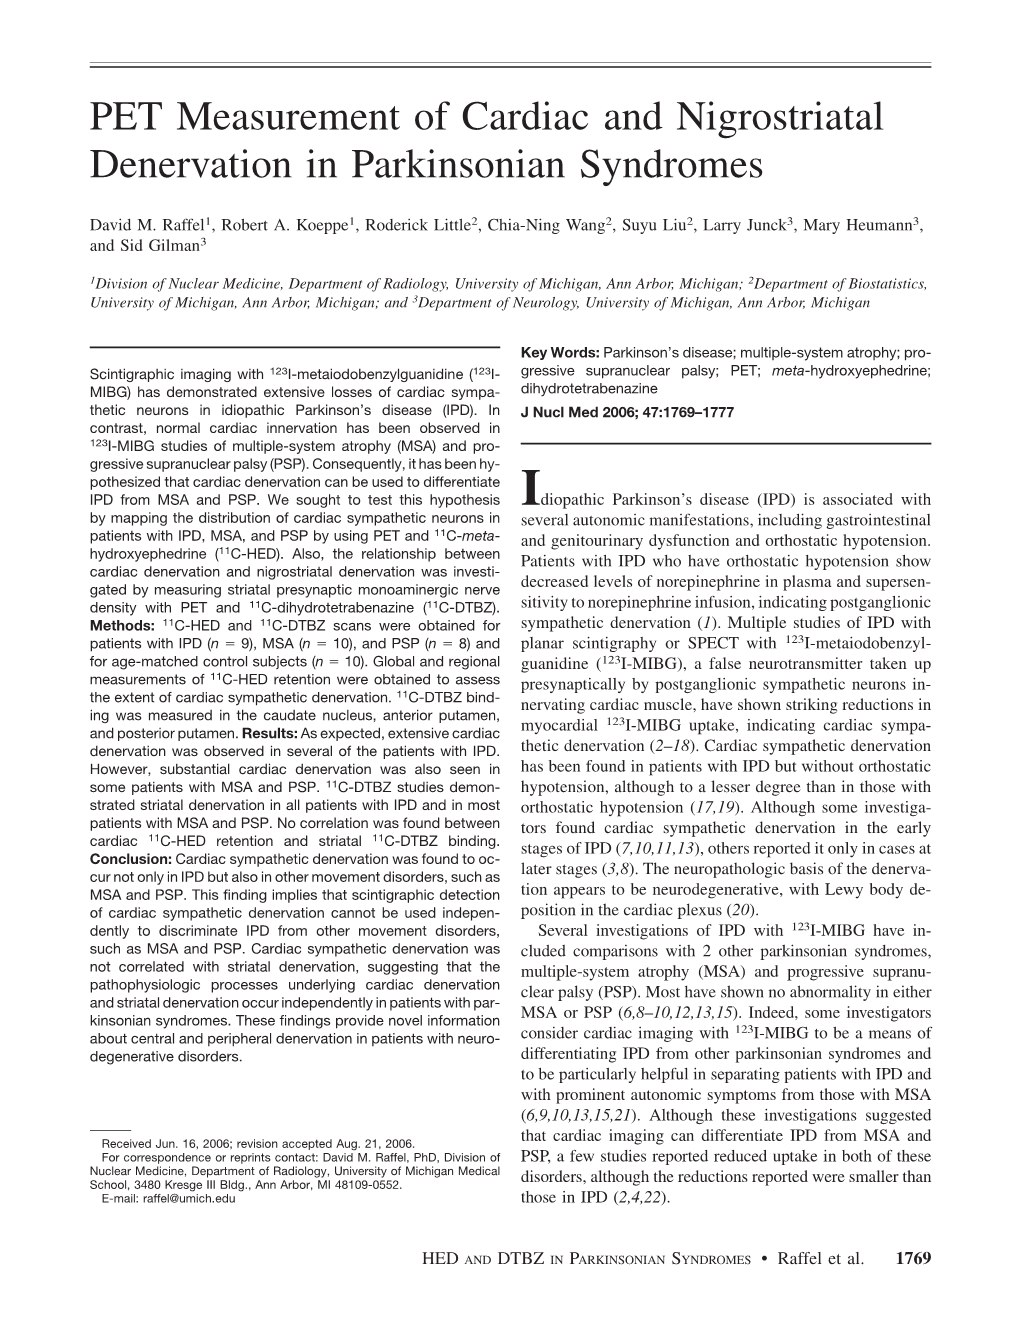 PET Measurement of Cardiac and Nigrostriatal Denervation in Parkinsonian Syndromes